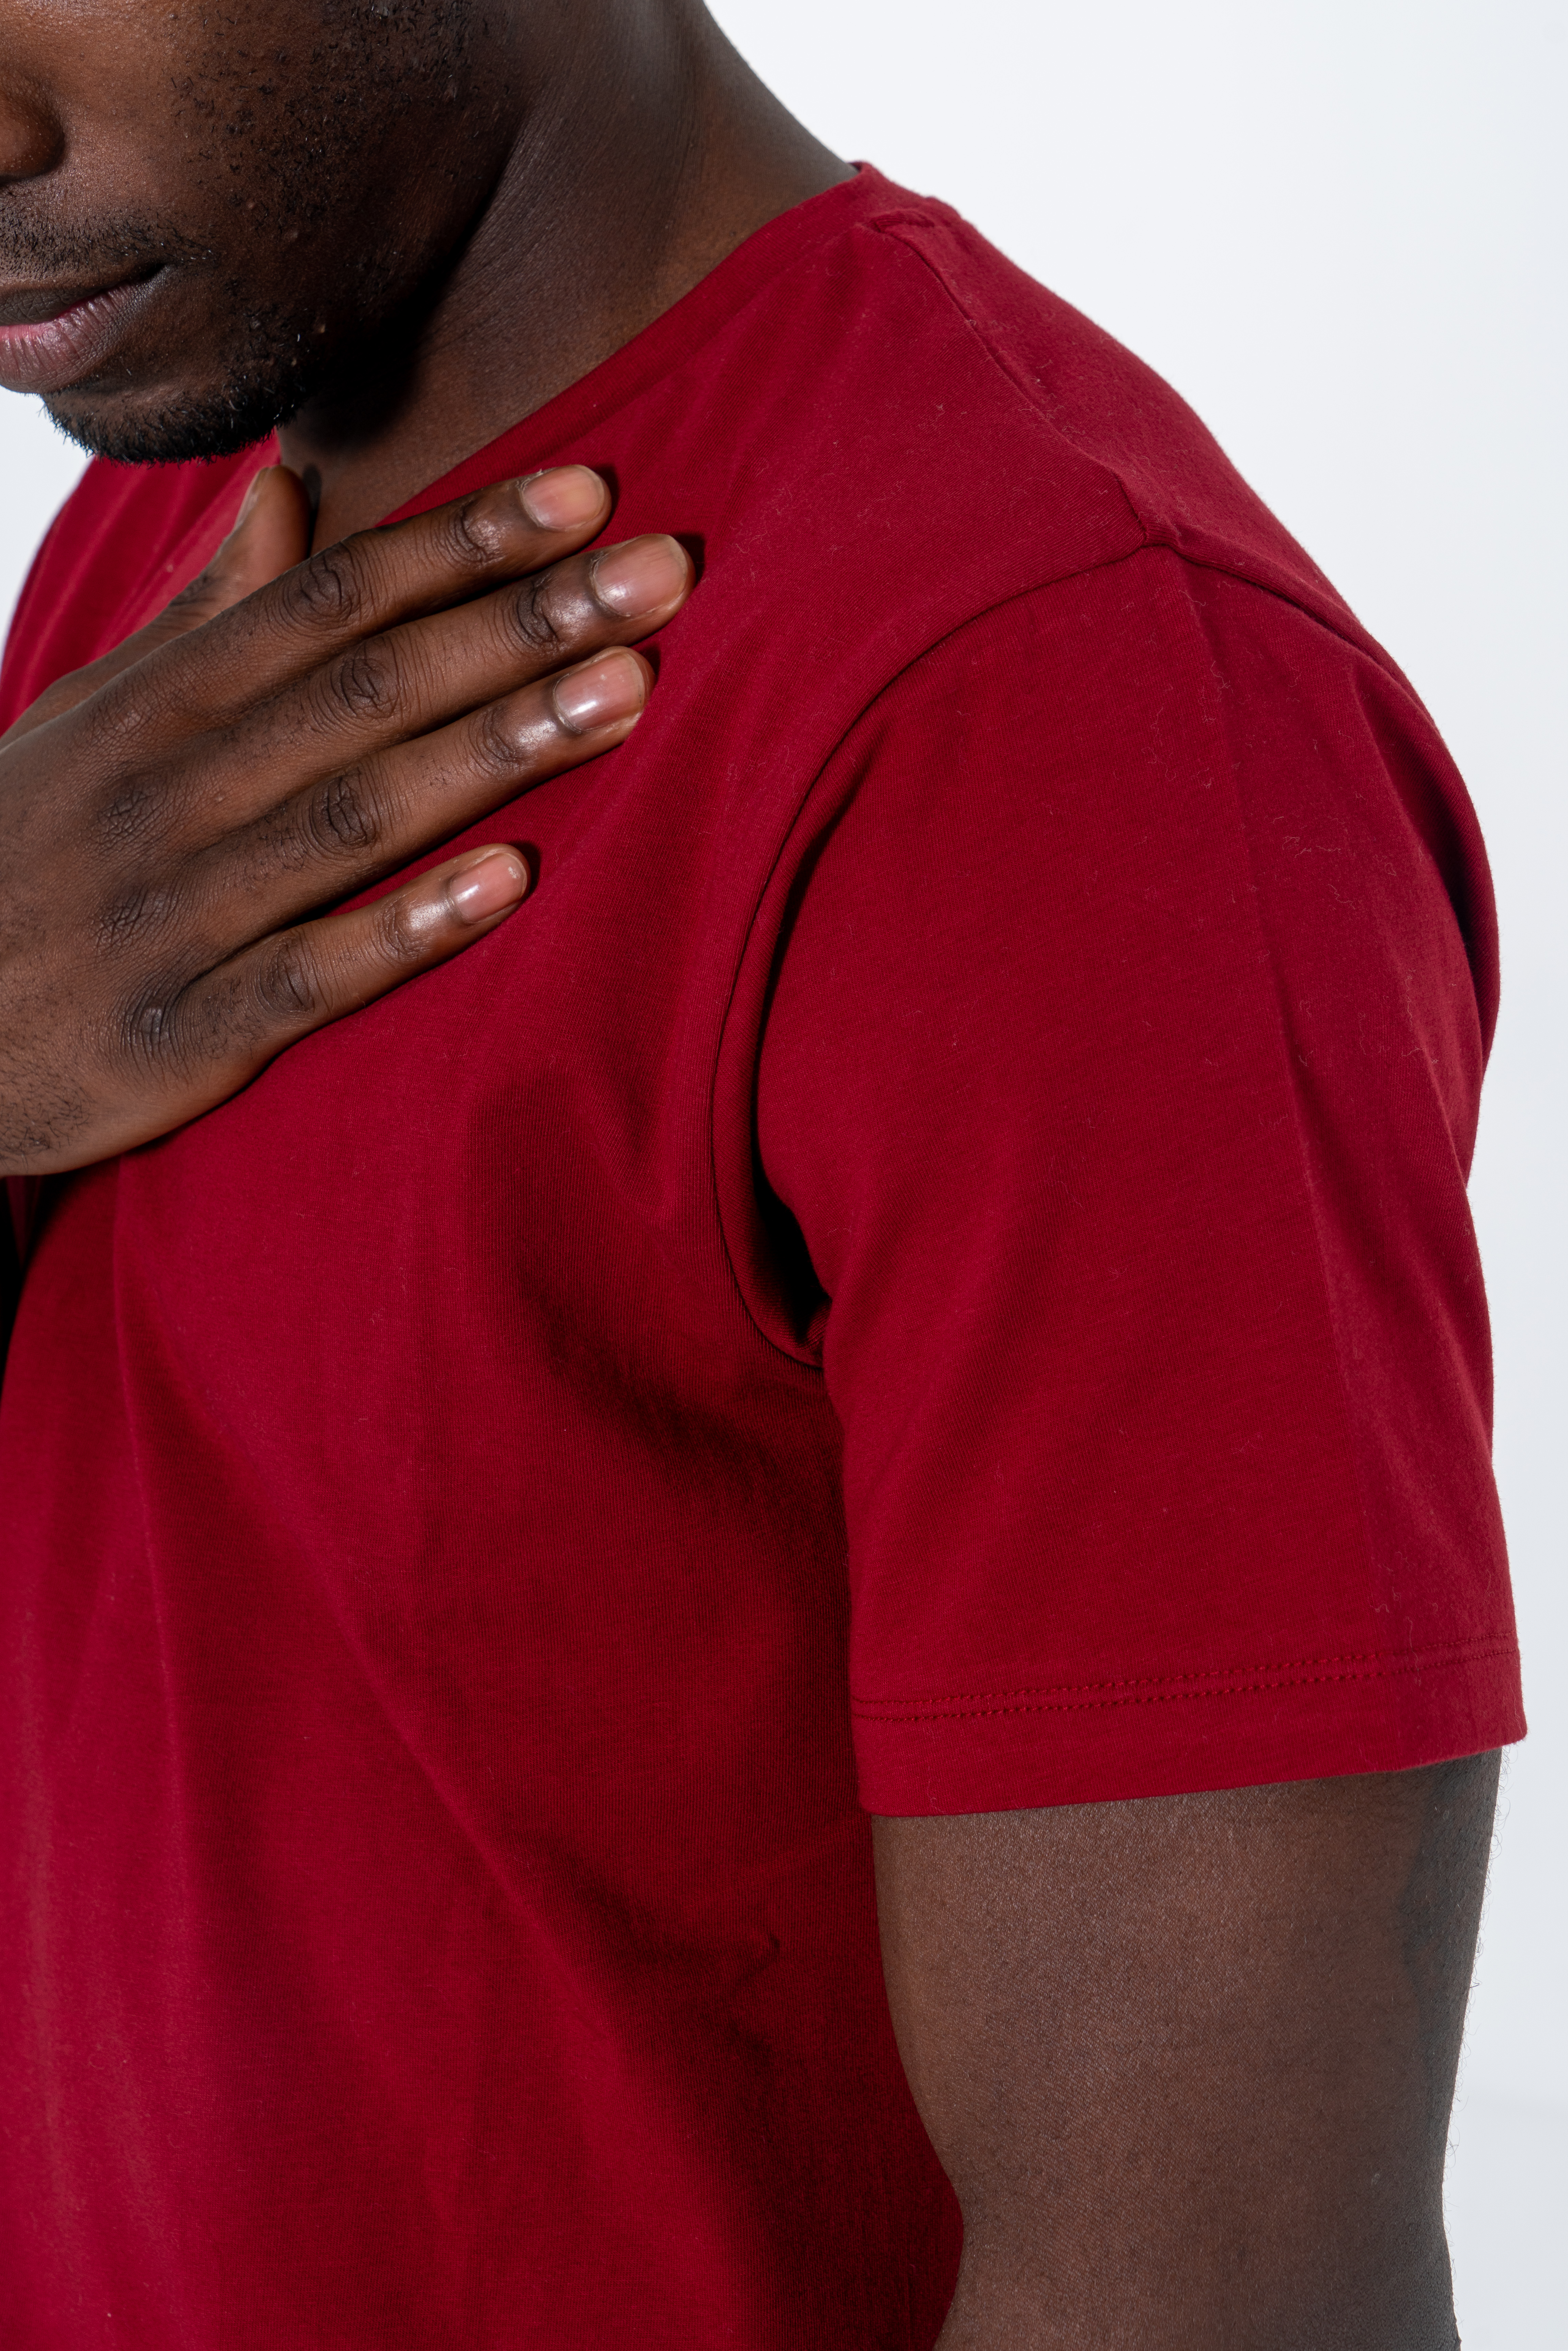 T-Shirt Dark Red Casual Man